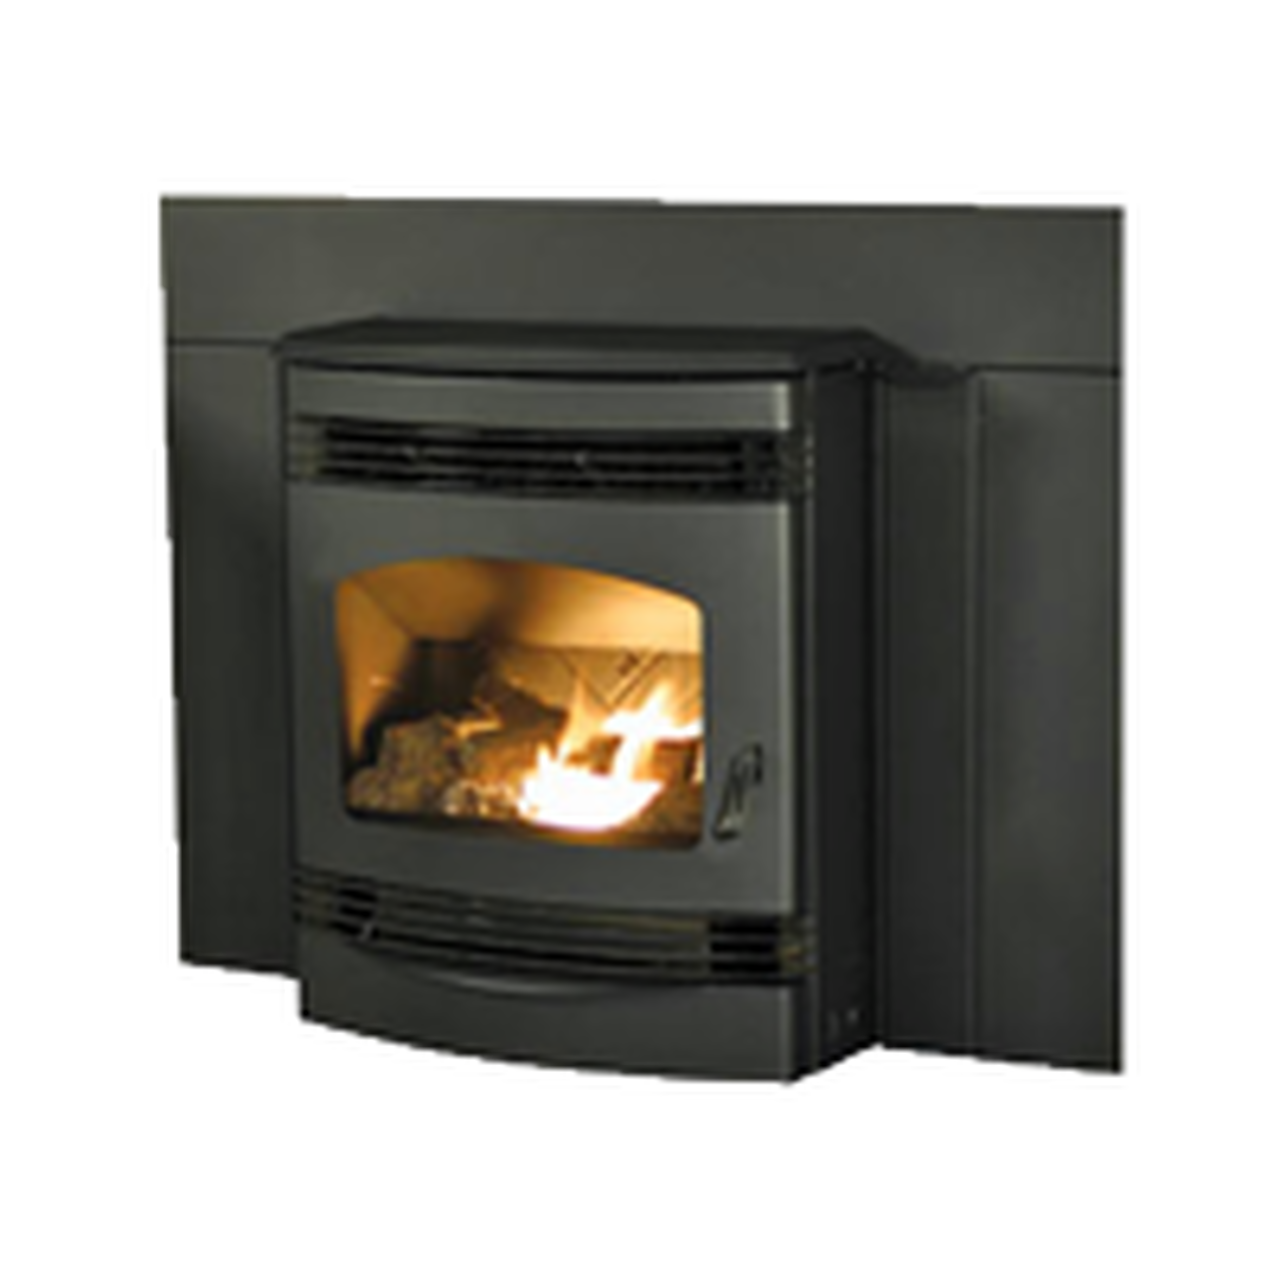 Heatilator Gas Fireplace Parts Luxury Quadra Fire Santa Fe Pellet Insert Parts Free Shipping On